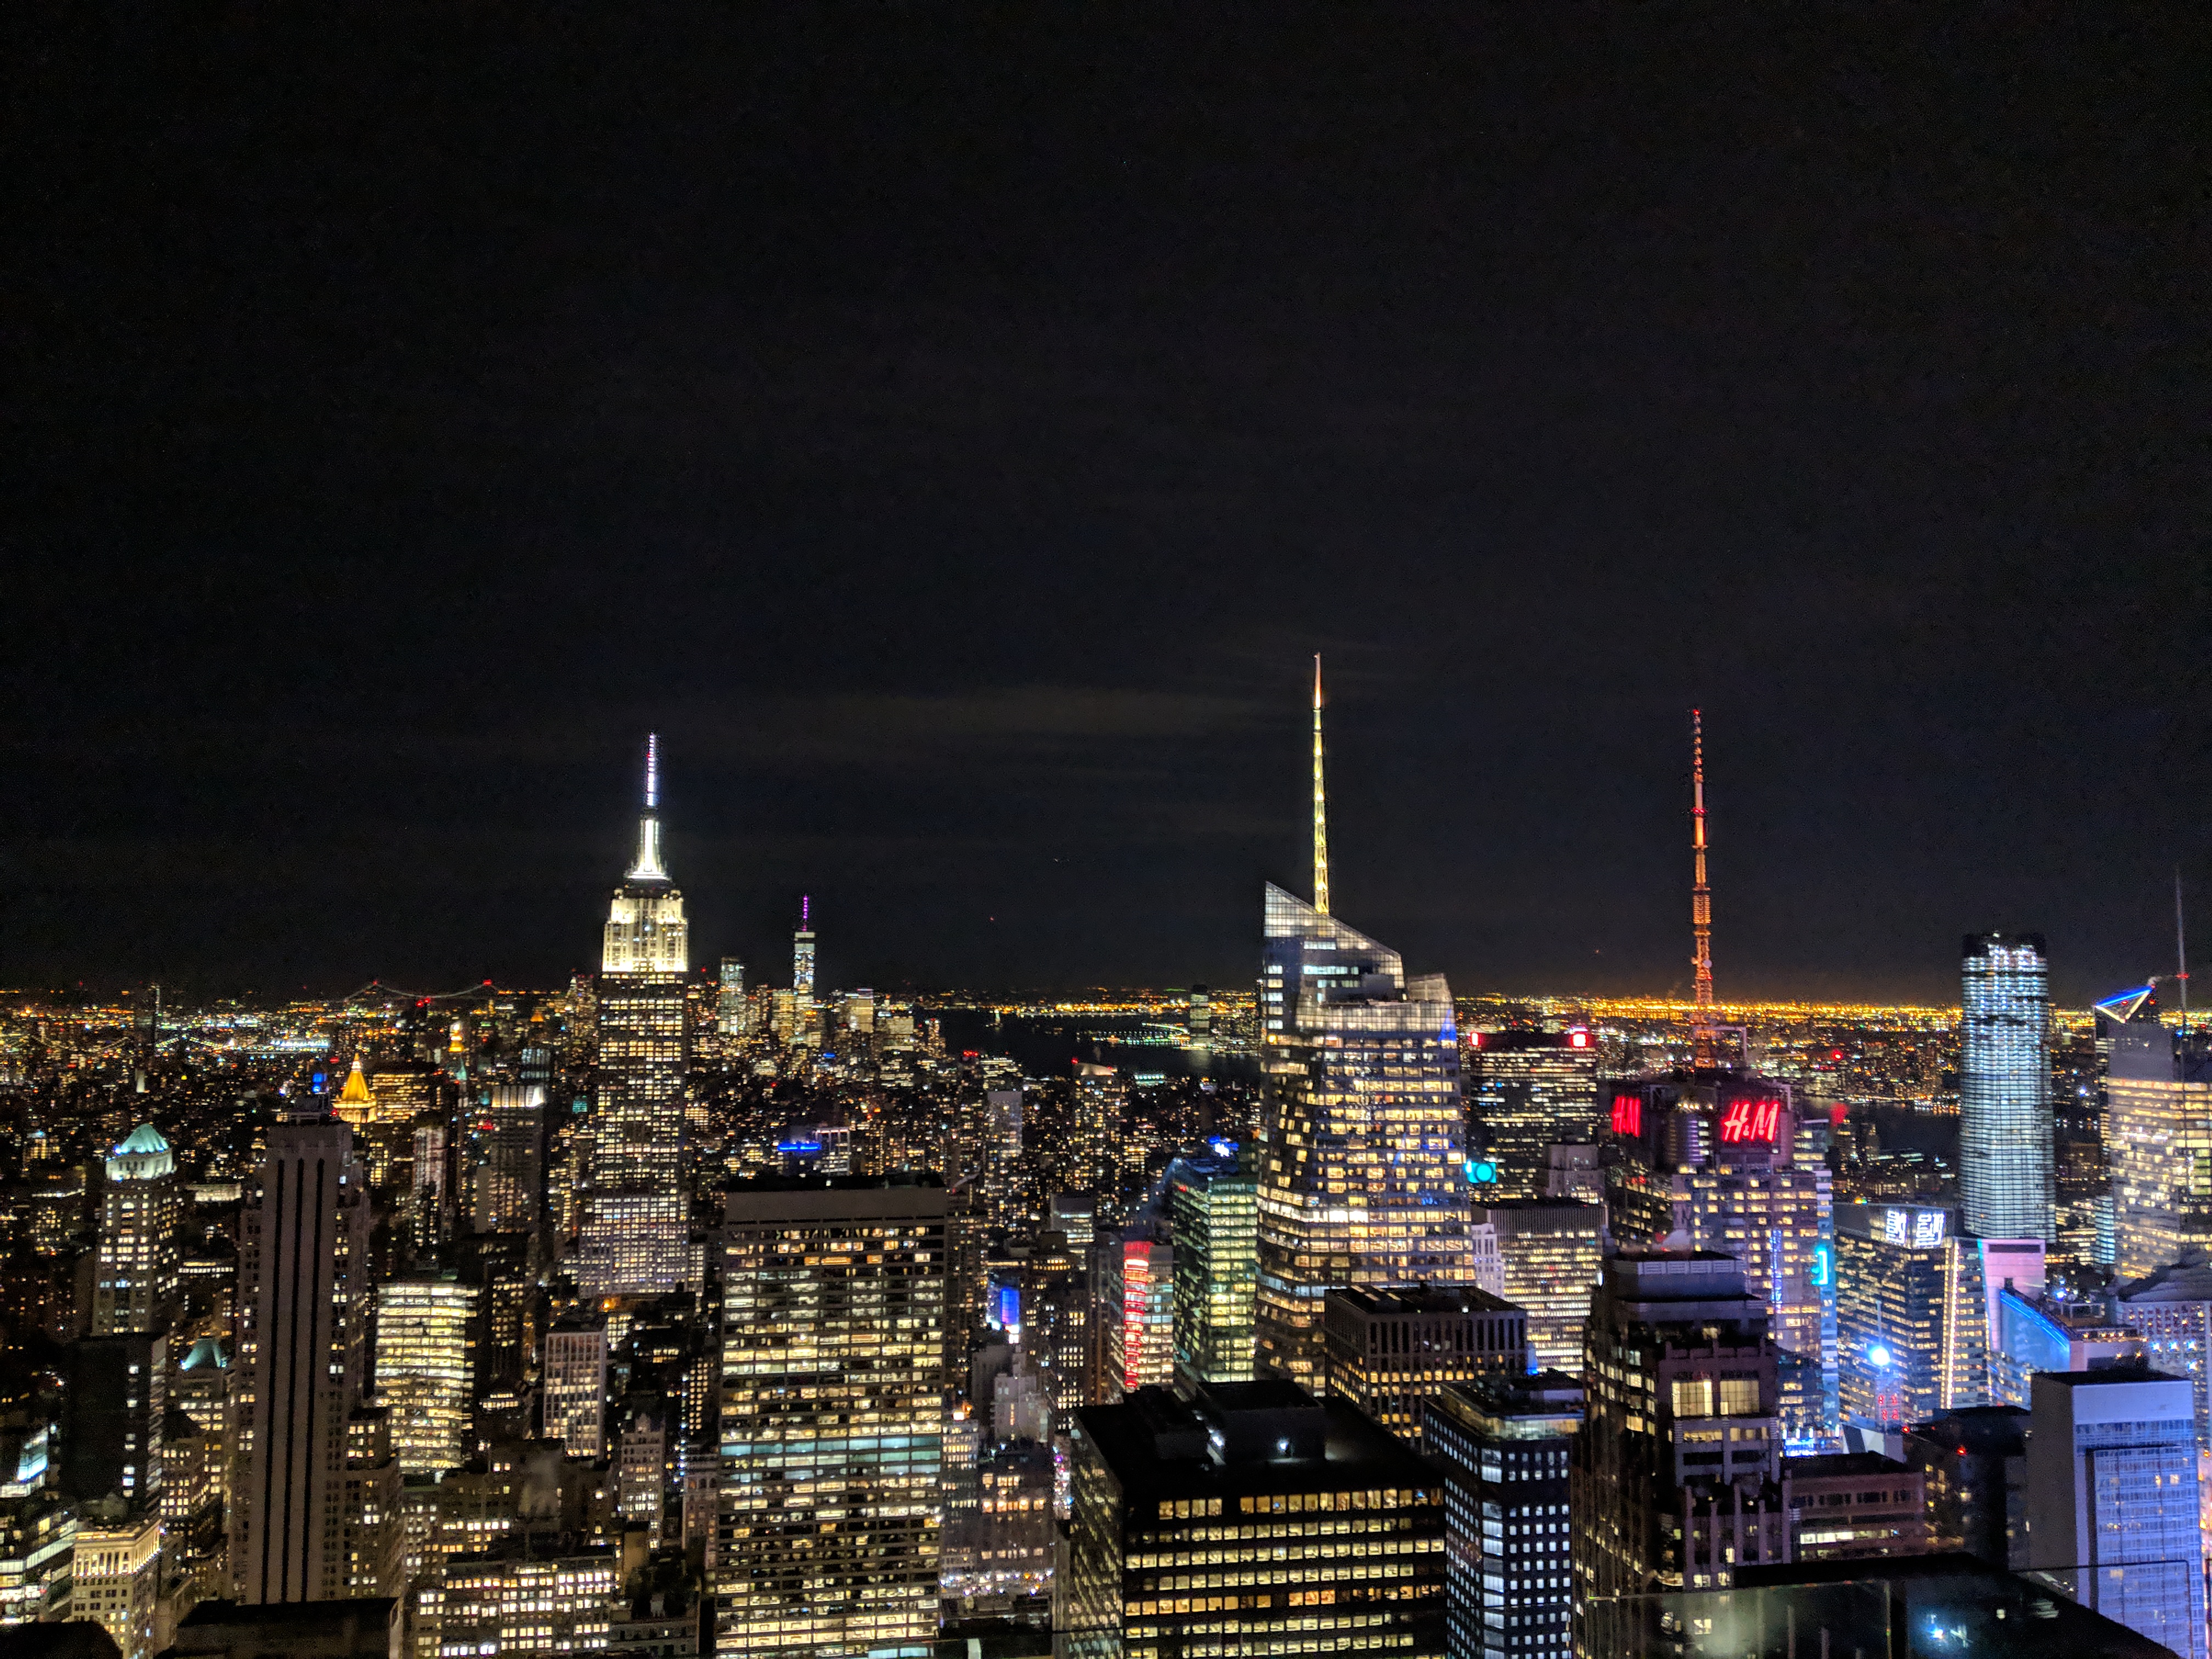 The New York Skyline at night